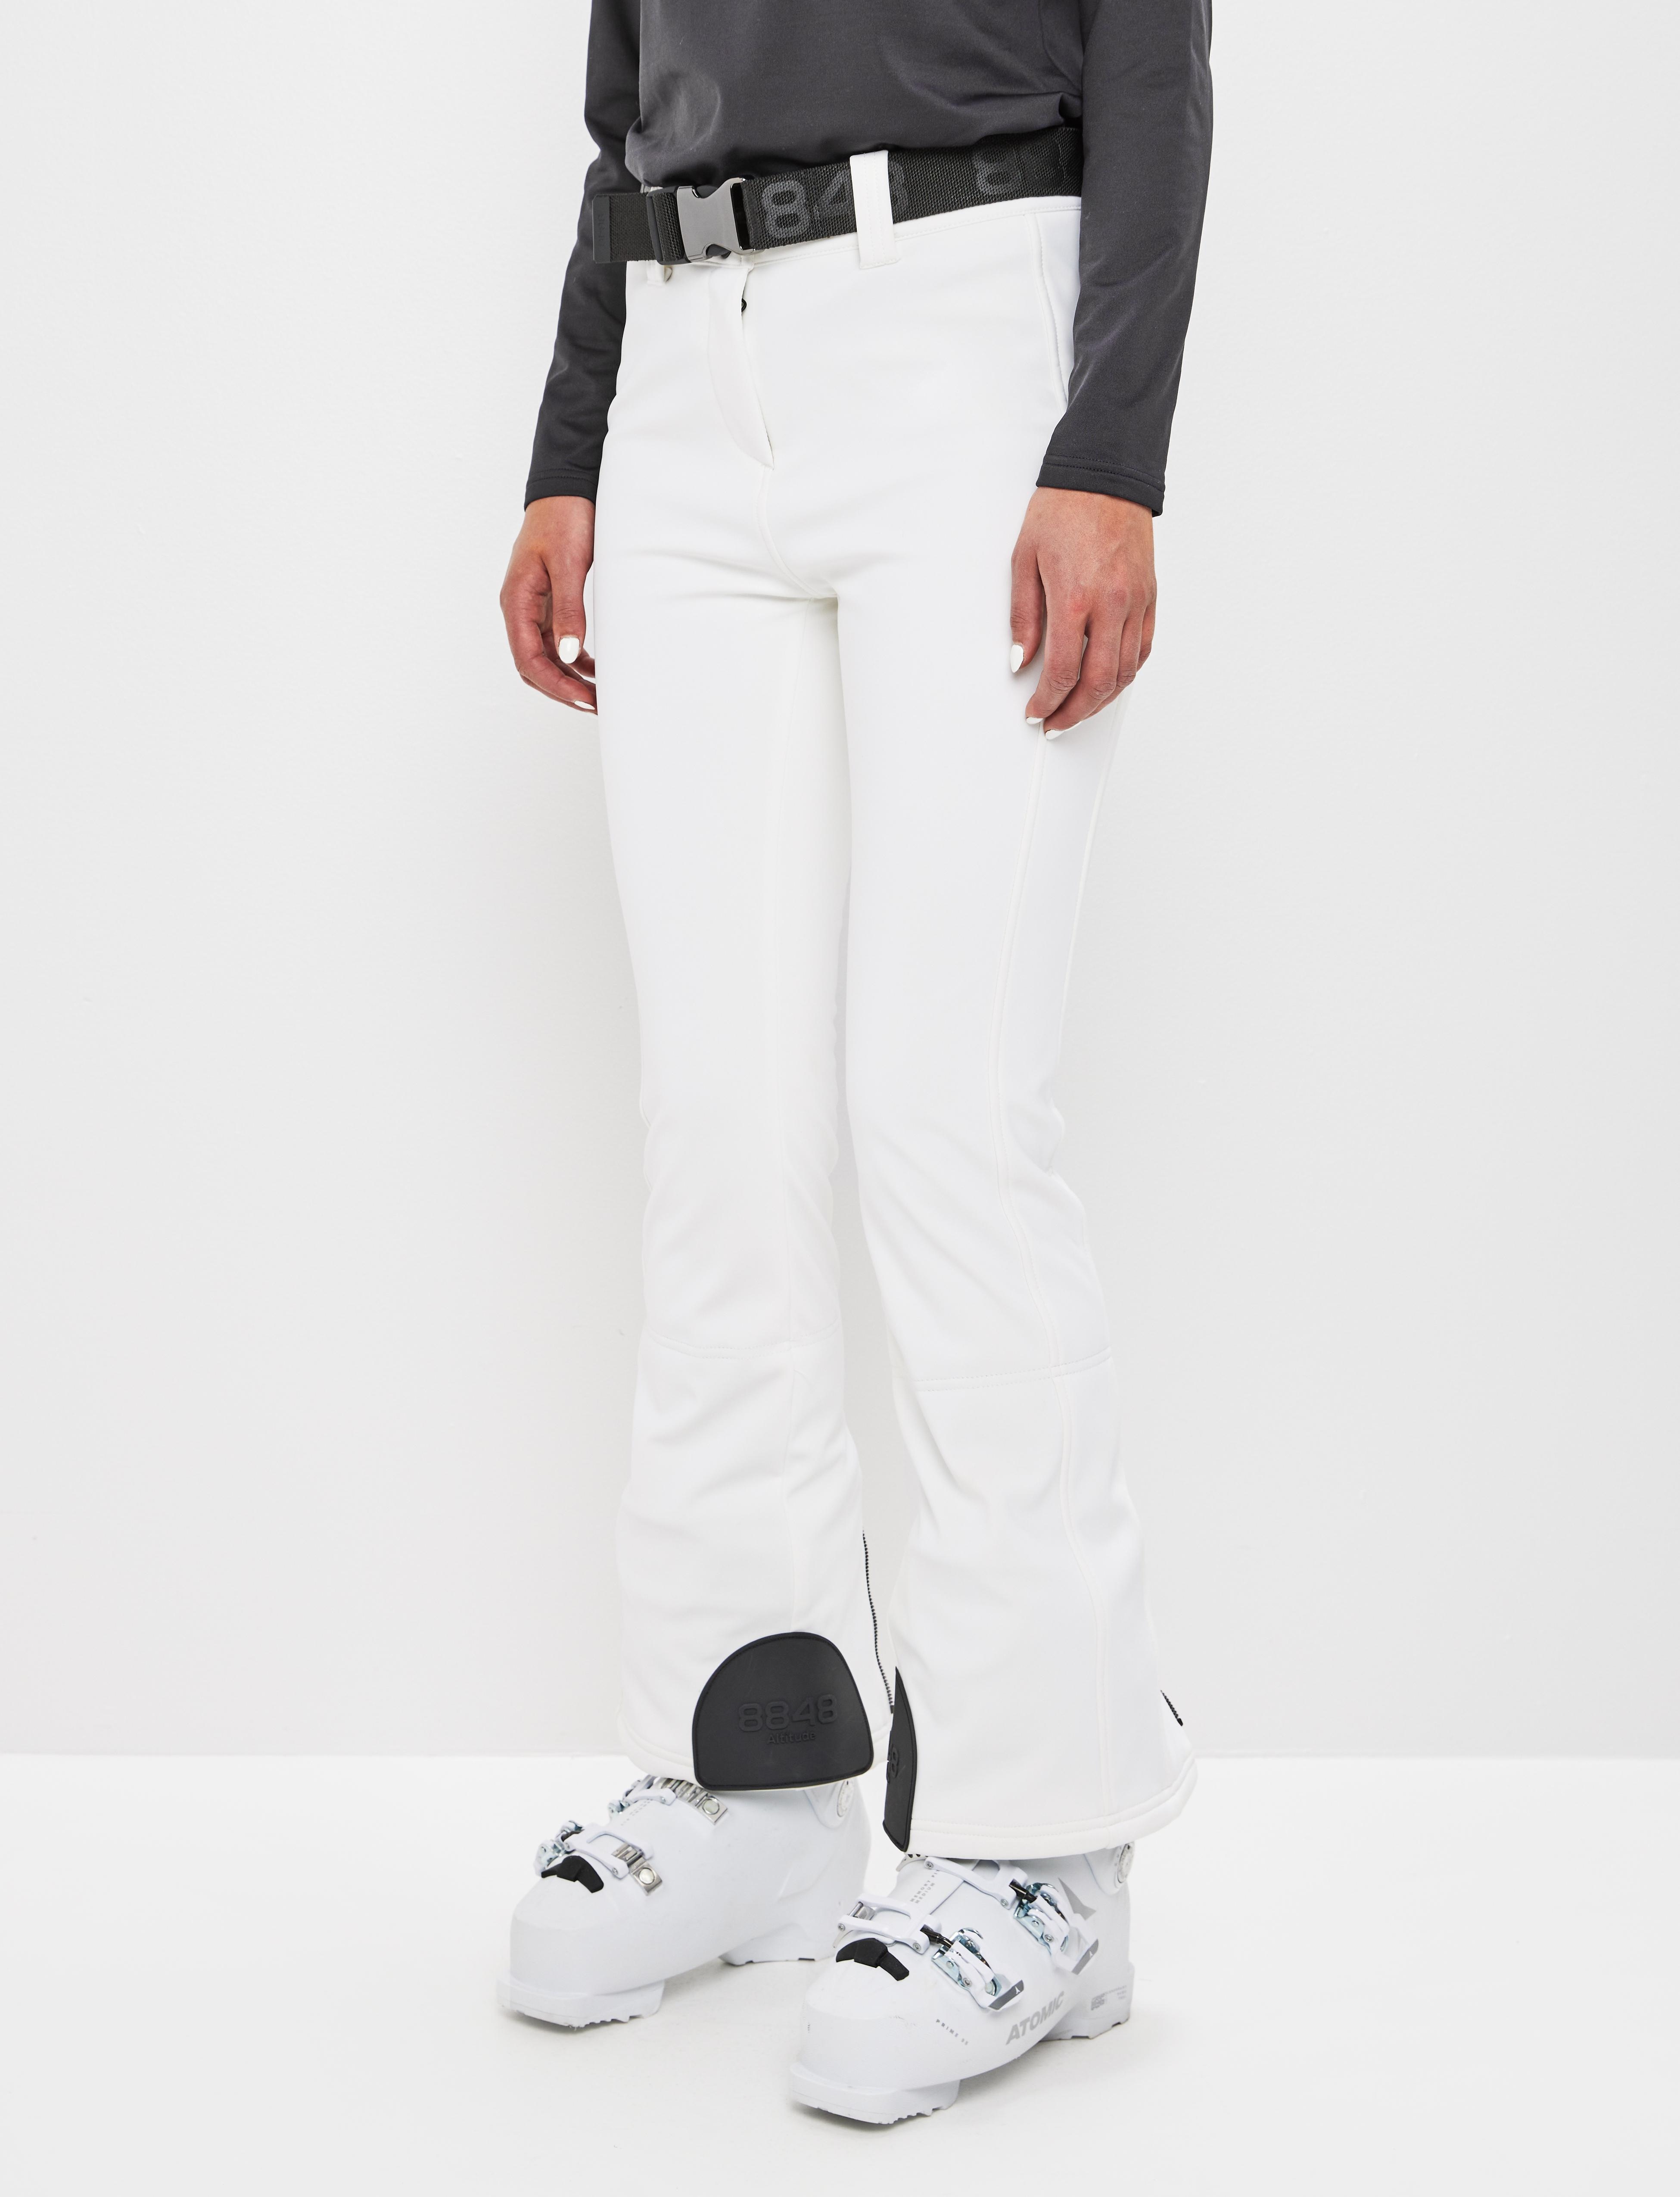 Tumblr W Pant Blanc - Weiße Ski Hose Damen slim fit